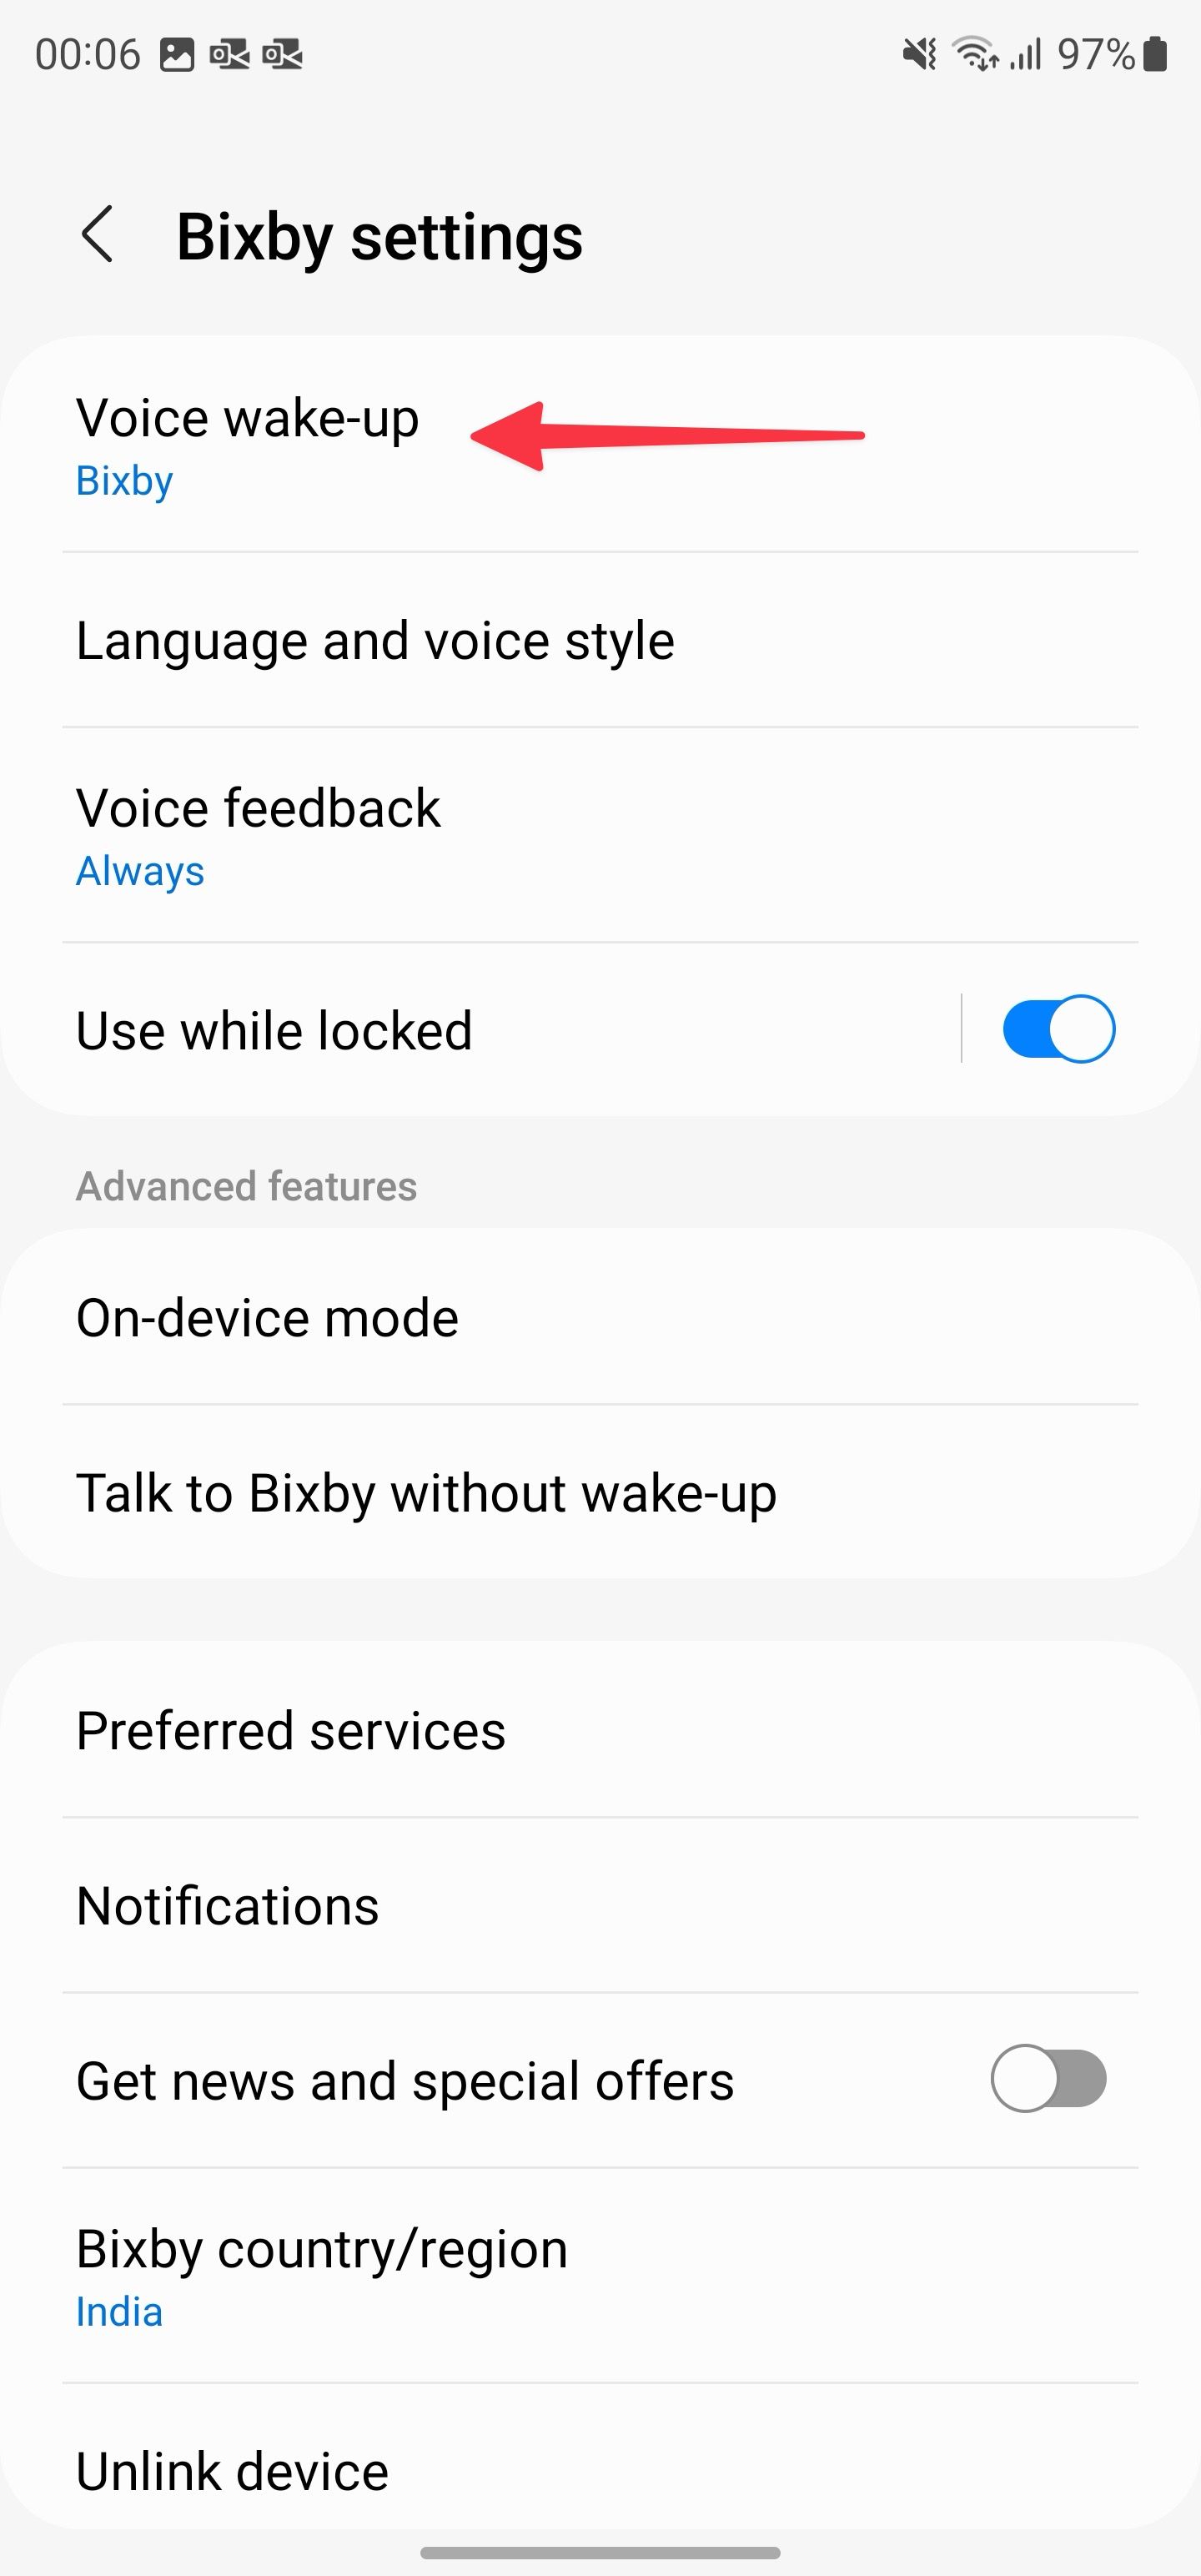 Bixby voice wake-up